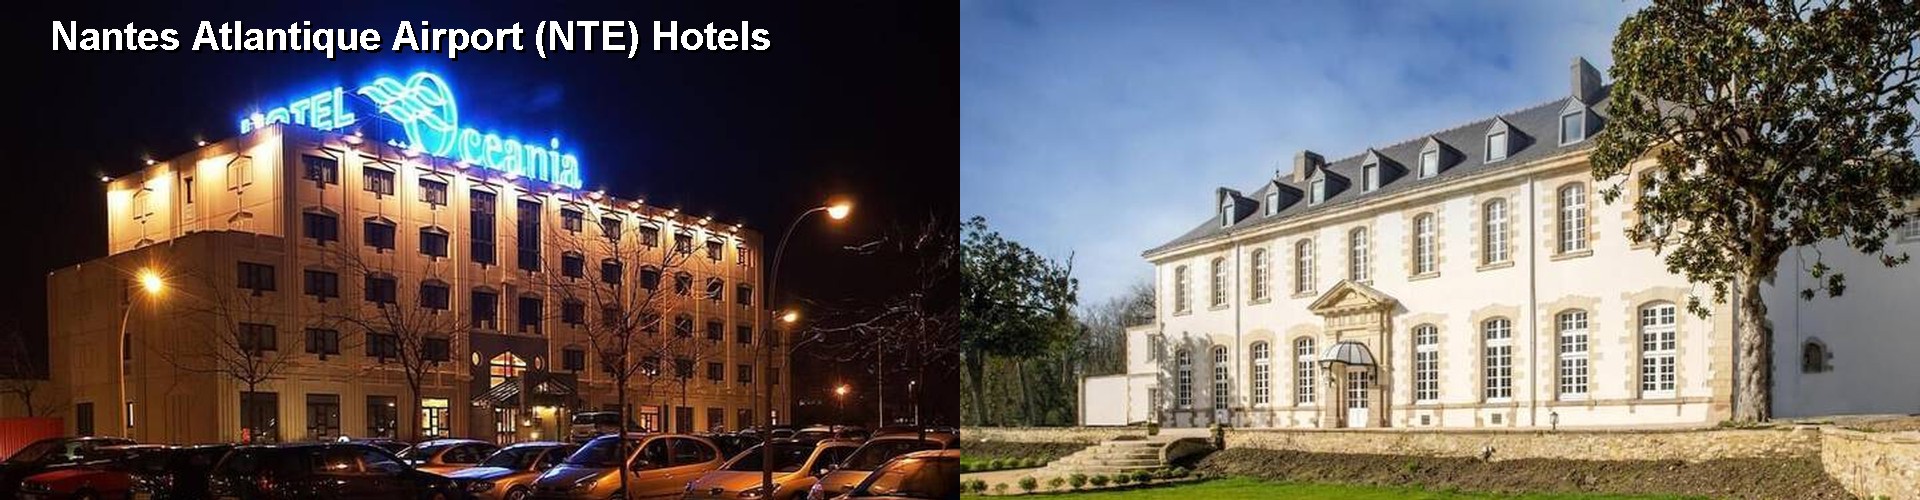 5 Best Hotels near Nantes Atlantique Airport (NTE)